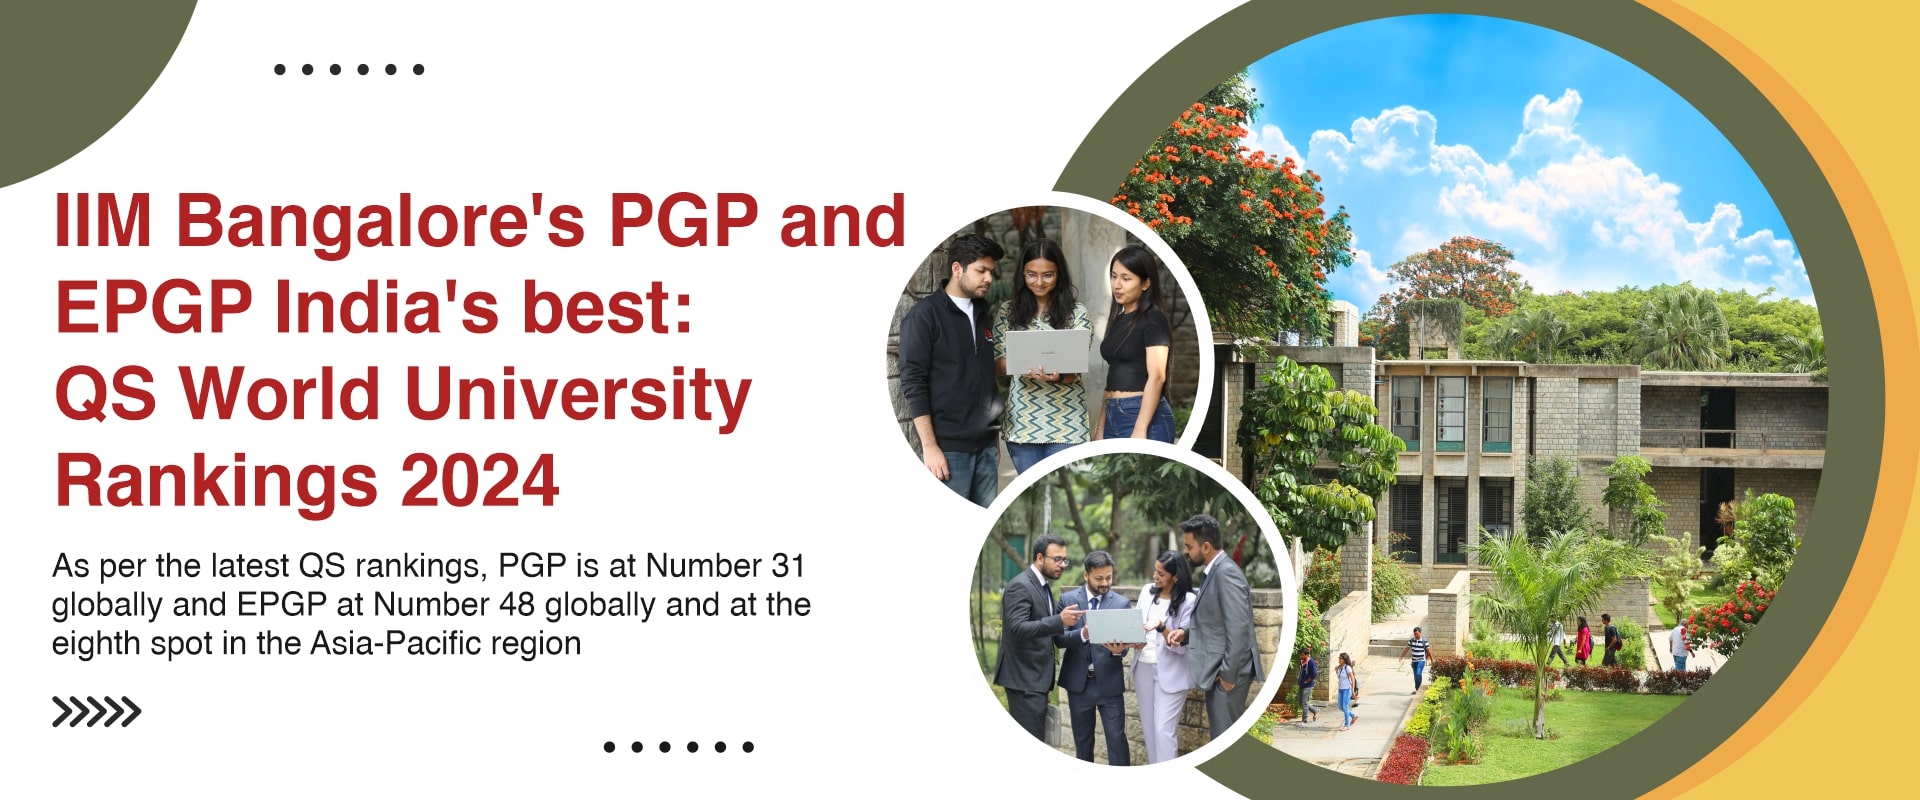 IIM Bangalore’s PGP and EPGP India’s best: QS World University Rankings 2024